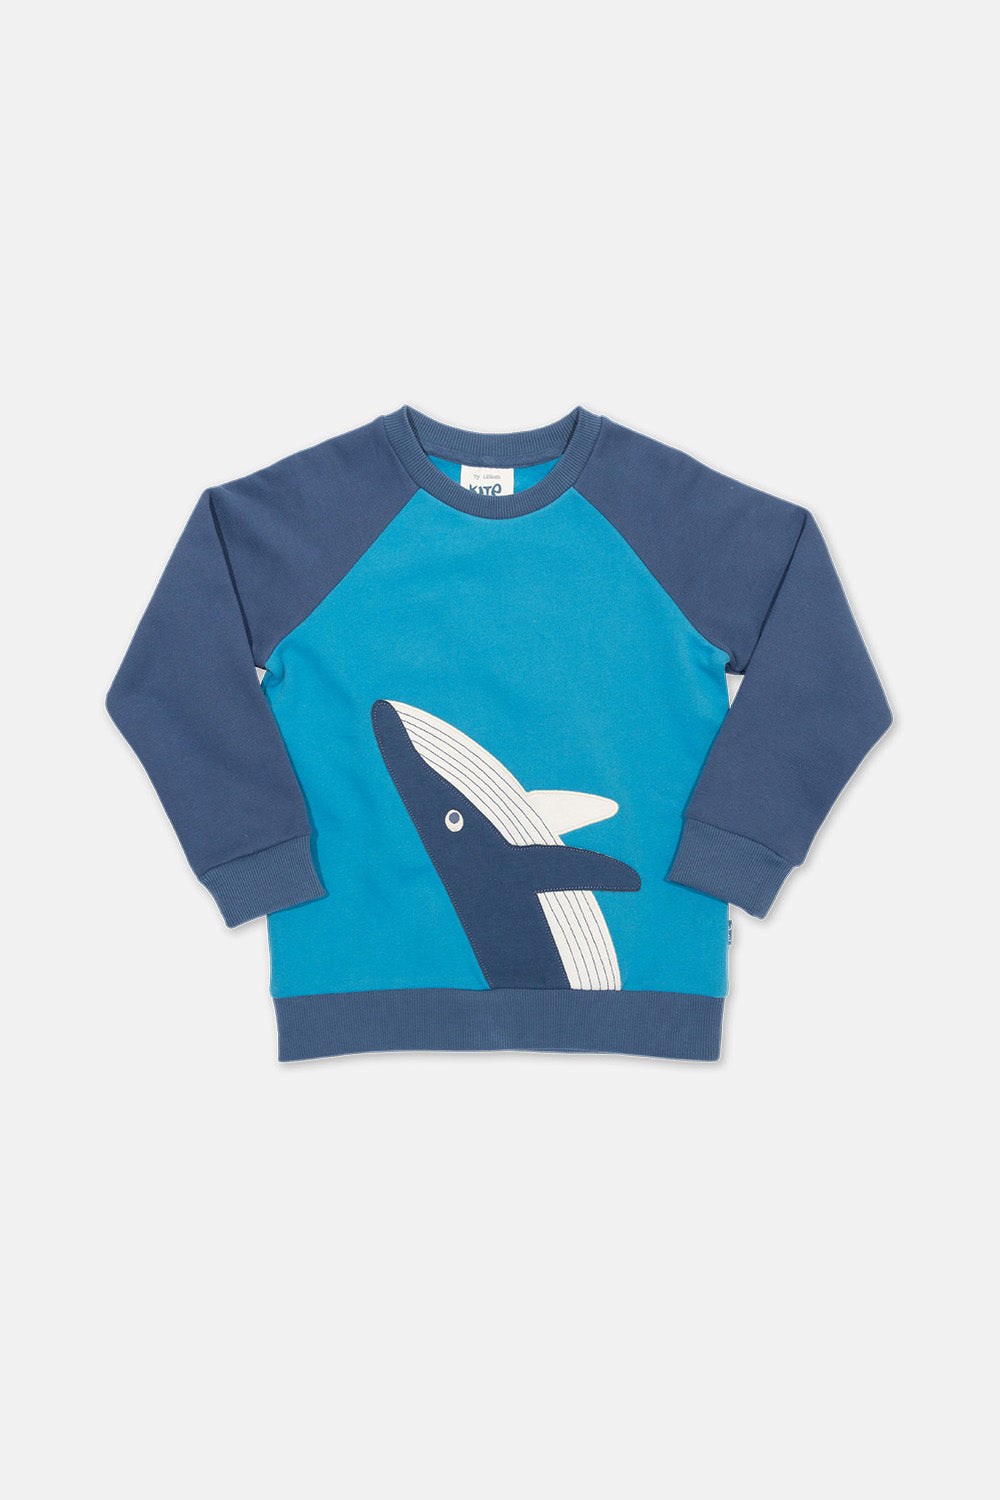 Wonder Whale Kids Organic Cotton Sweatshirt -